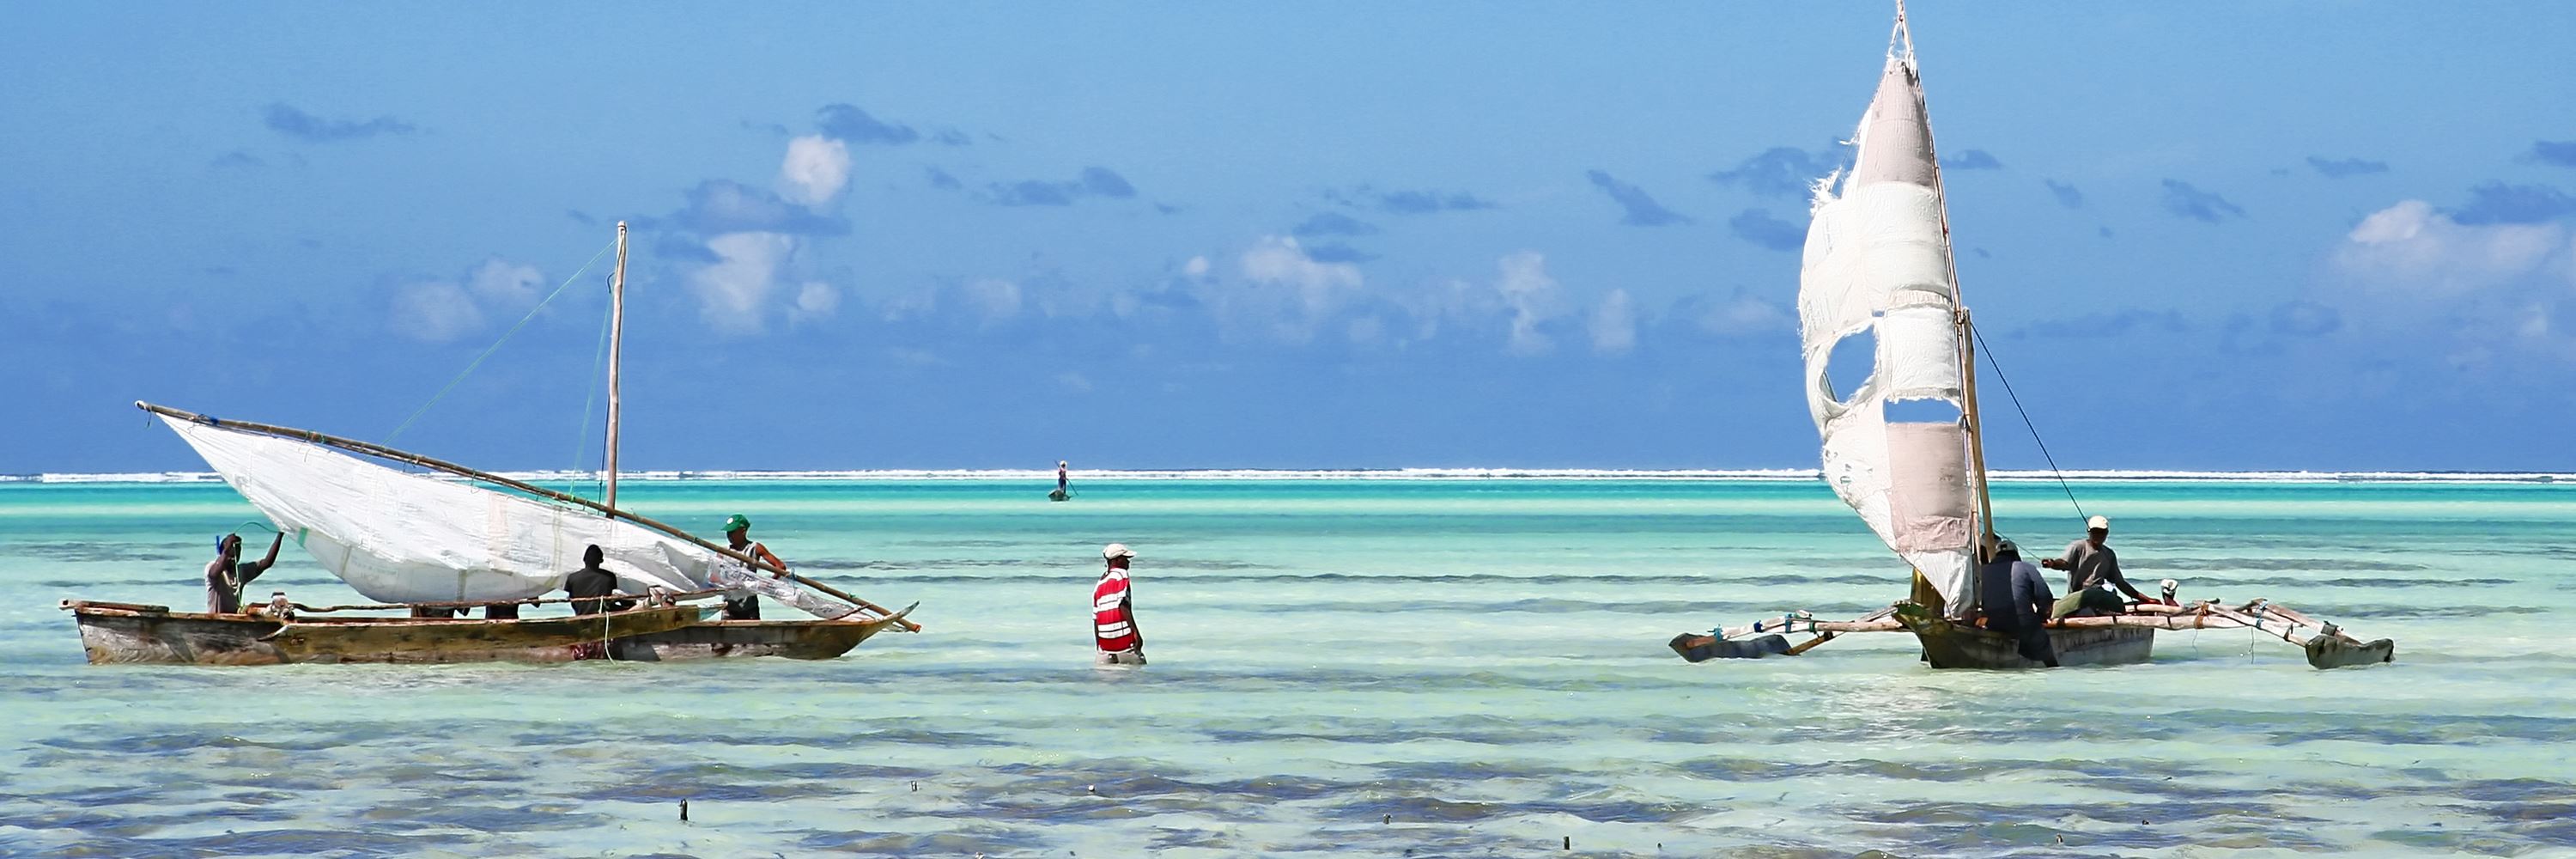 Zanzibar Archipelago Holidays 2020 2021 Tailor Made From Audley Travel